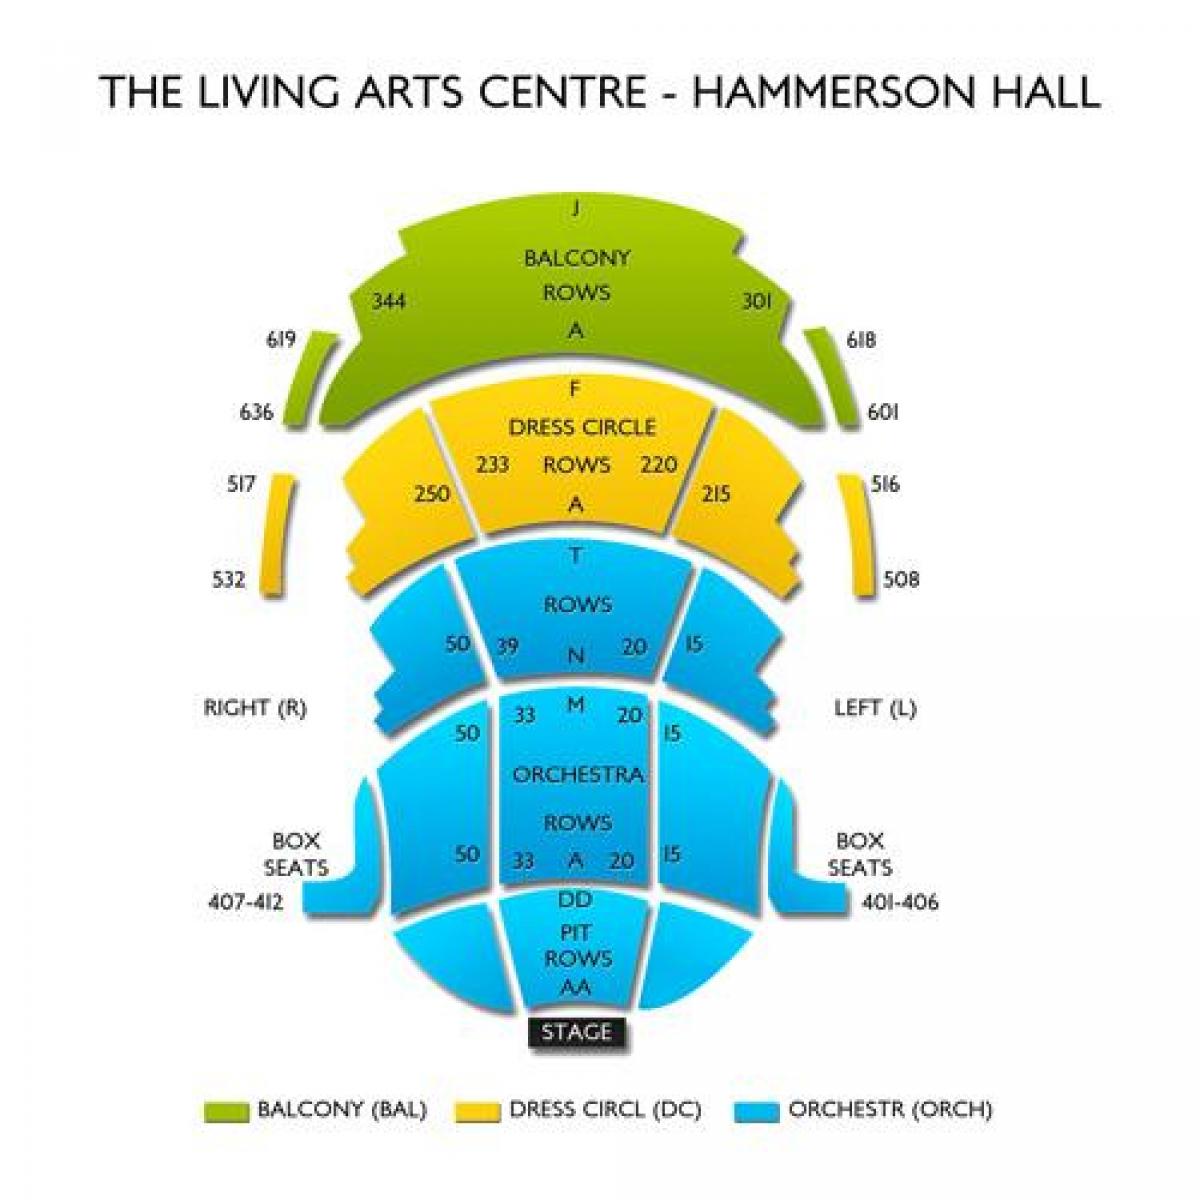 Kart over Living Arts Centre Hammerson hall